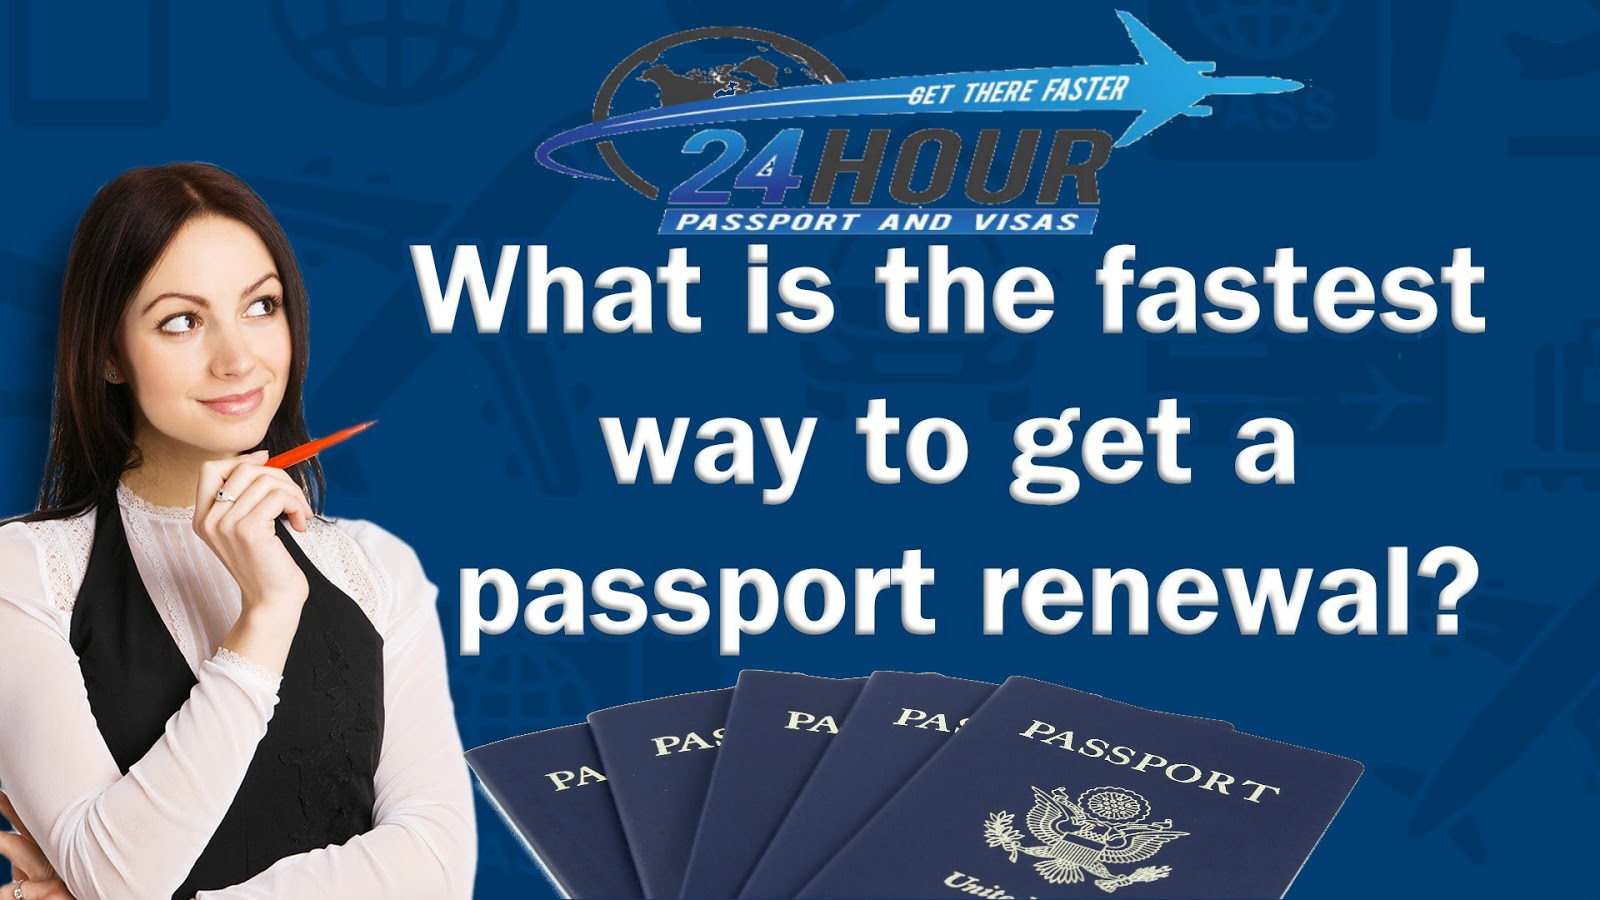 us post office passport renewal